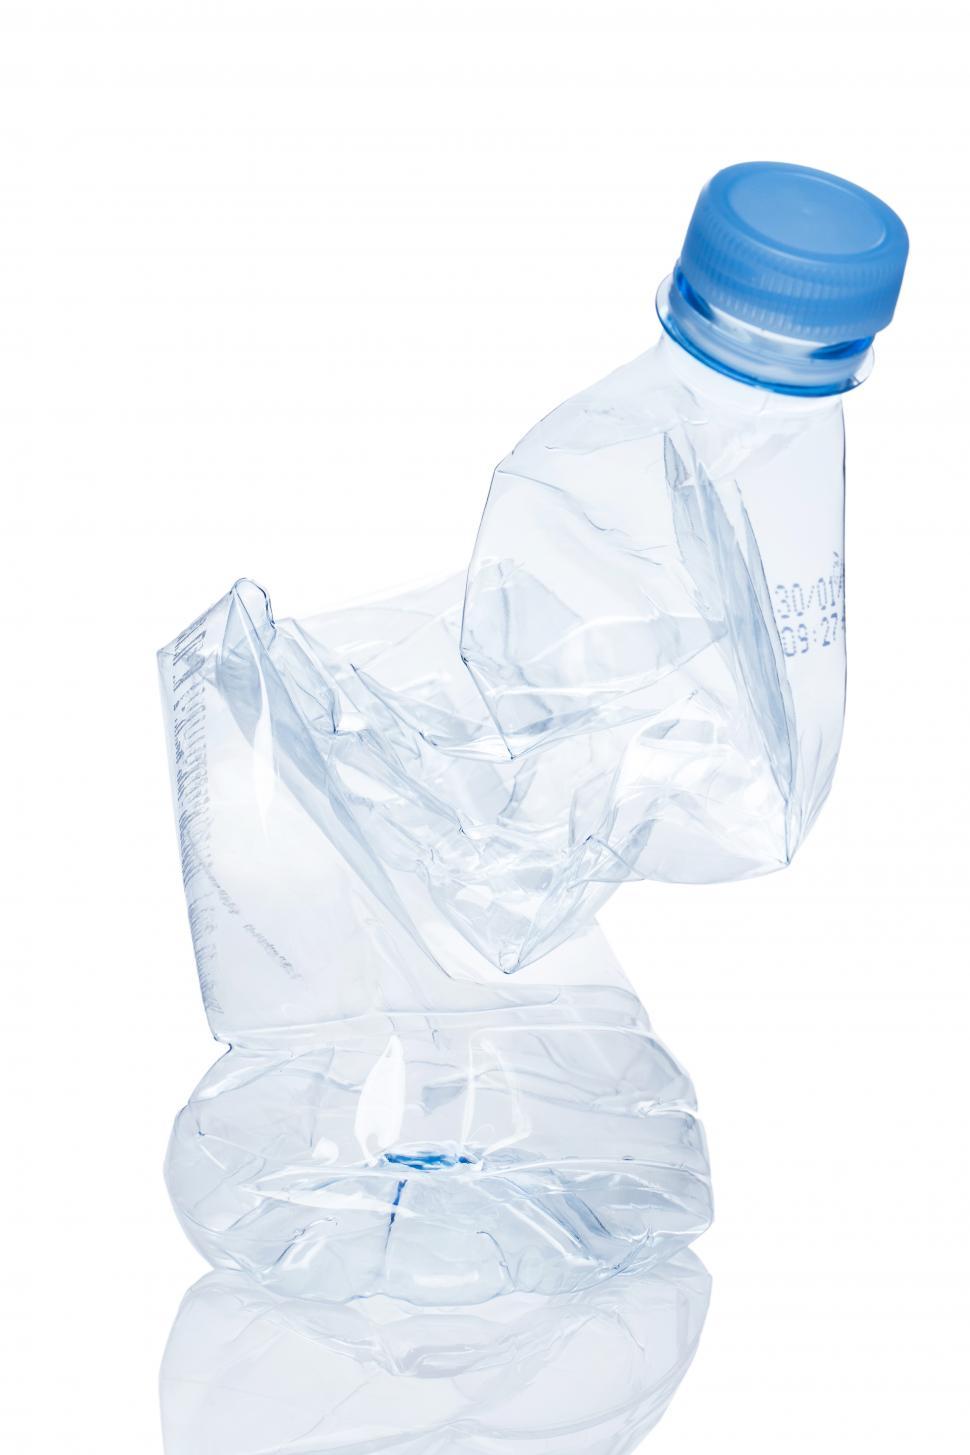 Free Image of Utilization. One empty plastic water bottle 